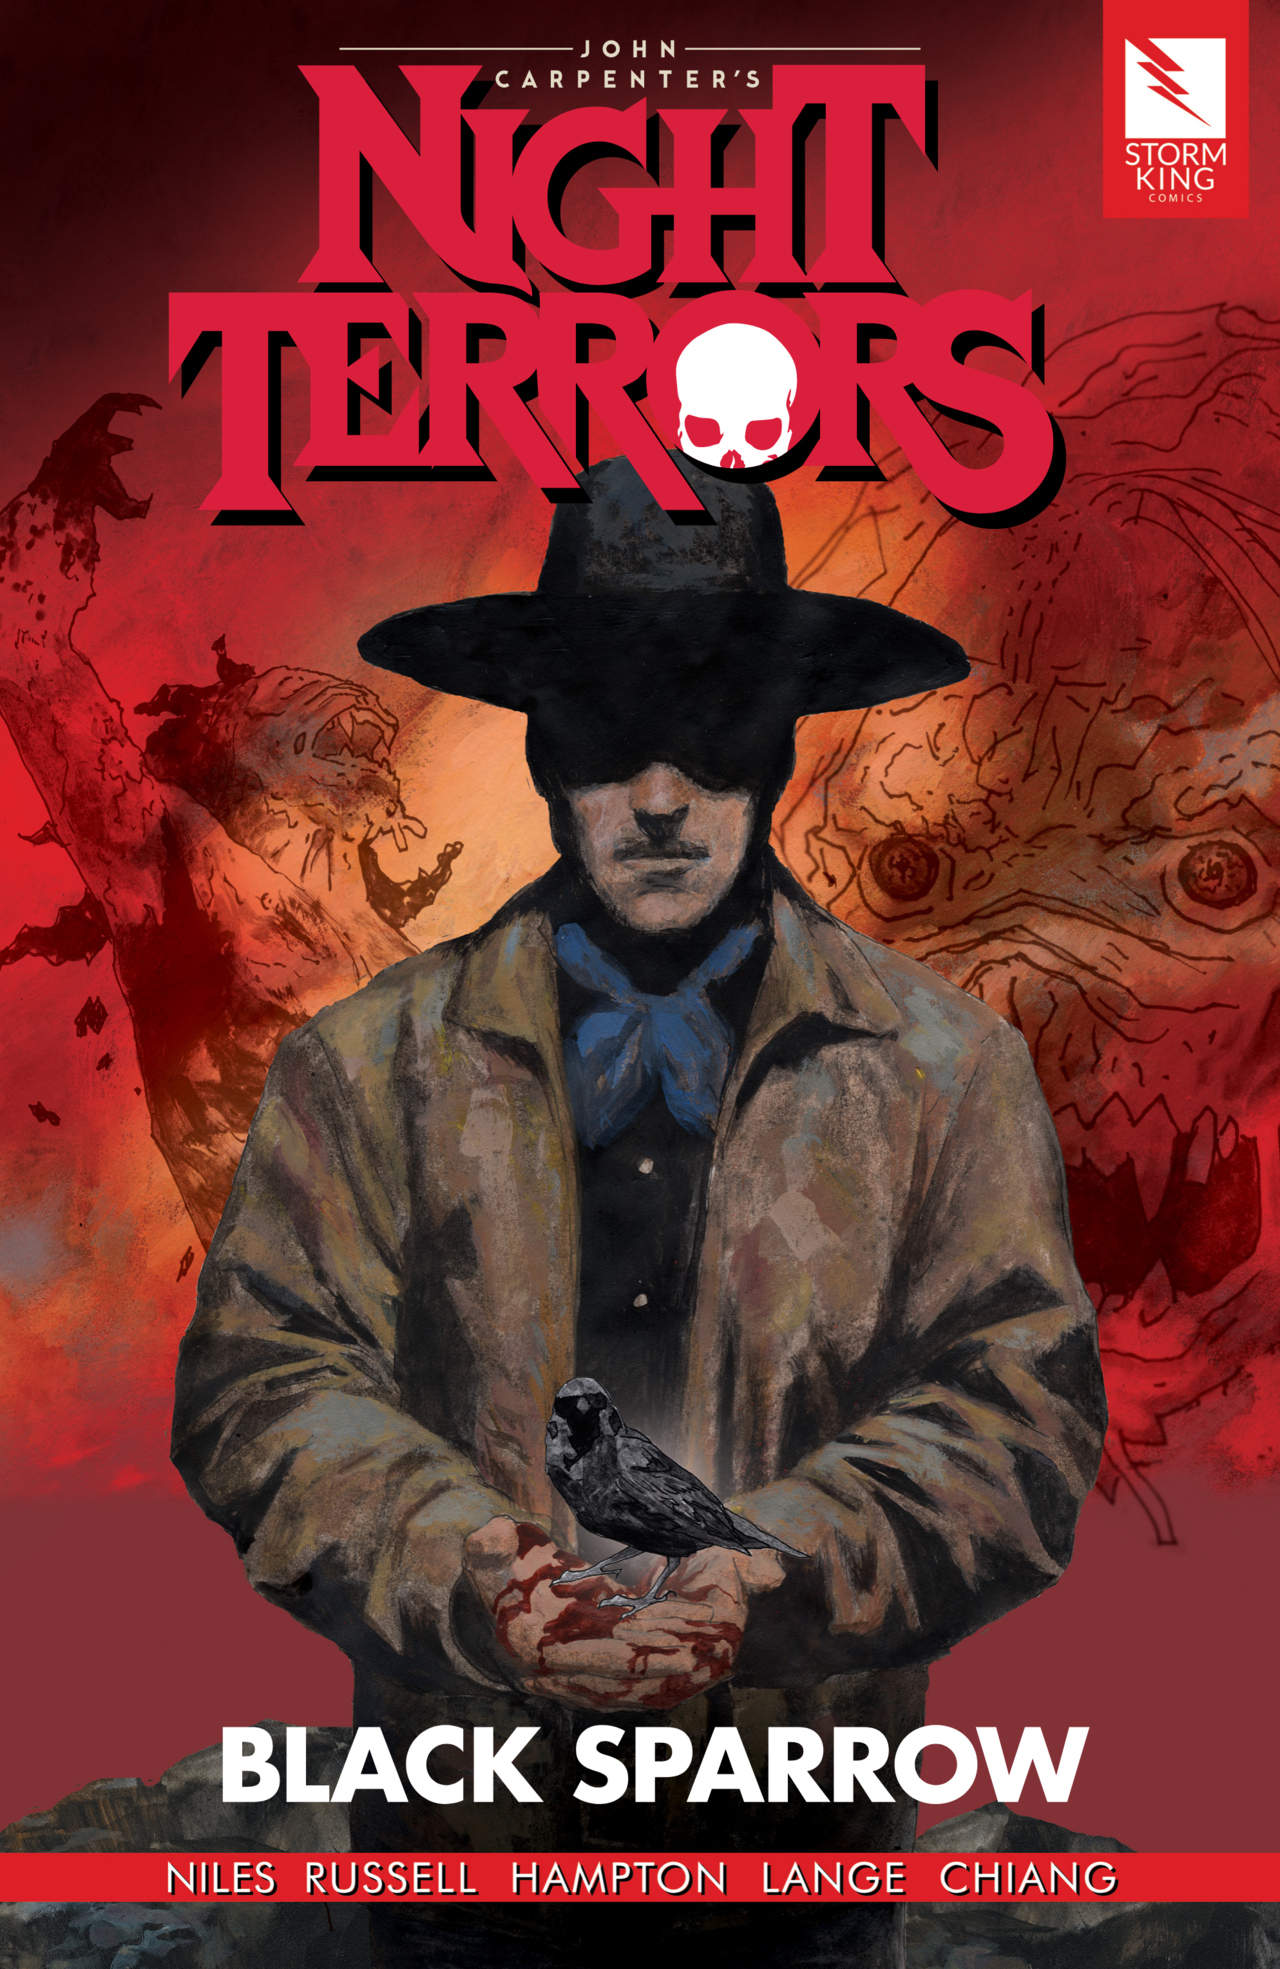 Read online John Carpenter's Night Terrors comic -  Issue # Black Sparrow - 1